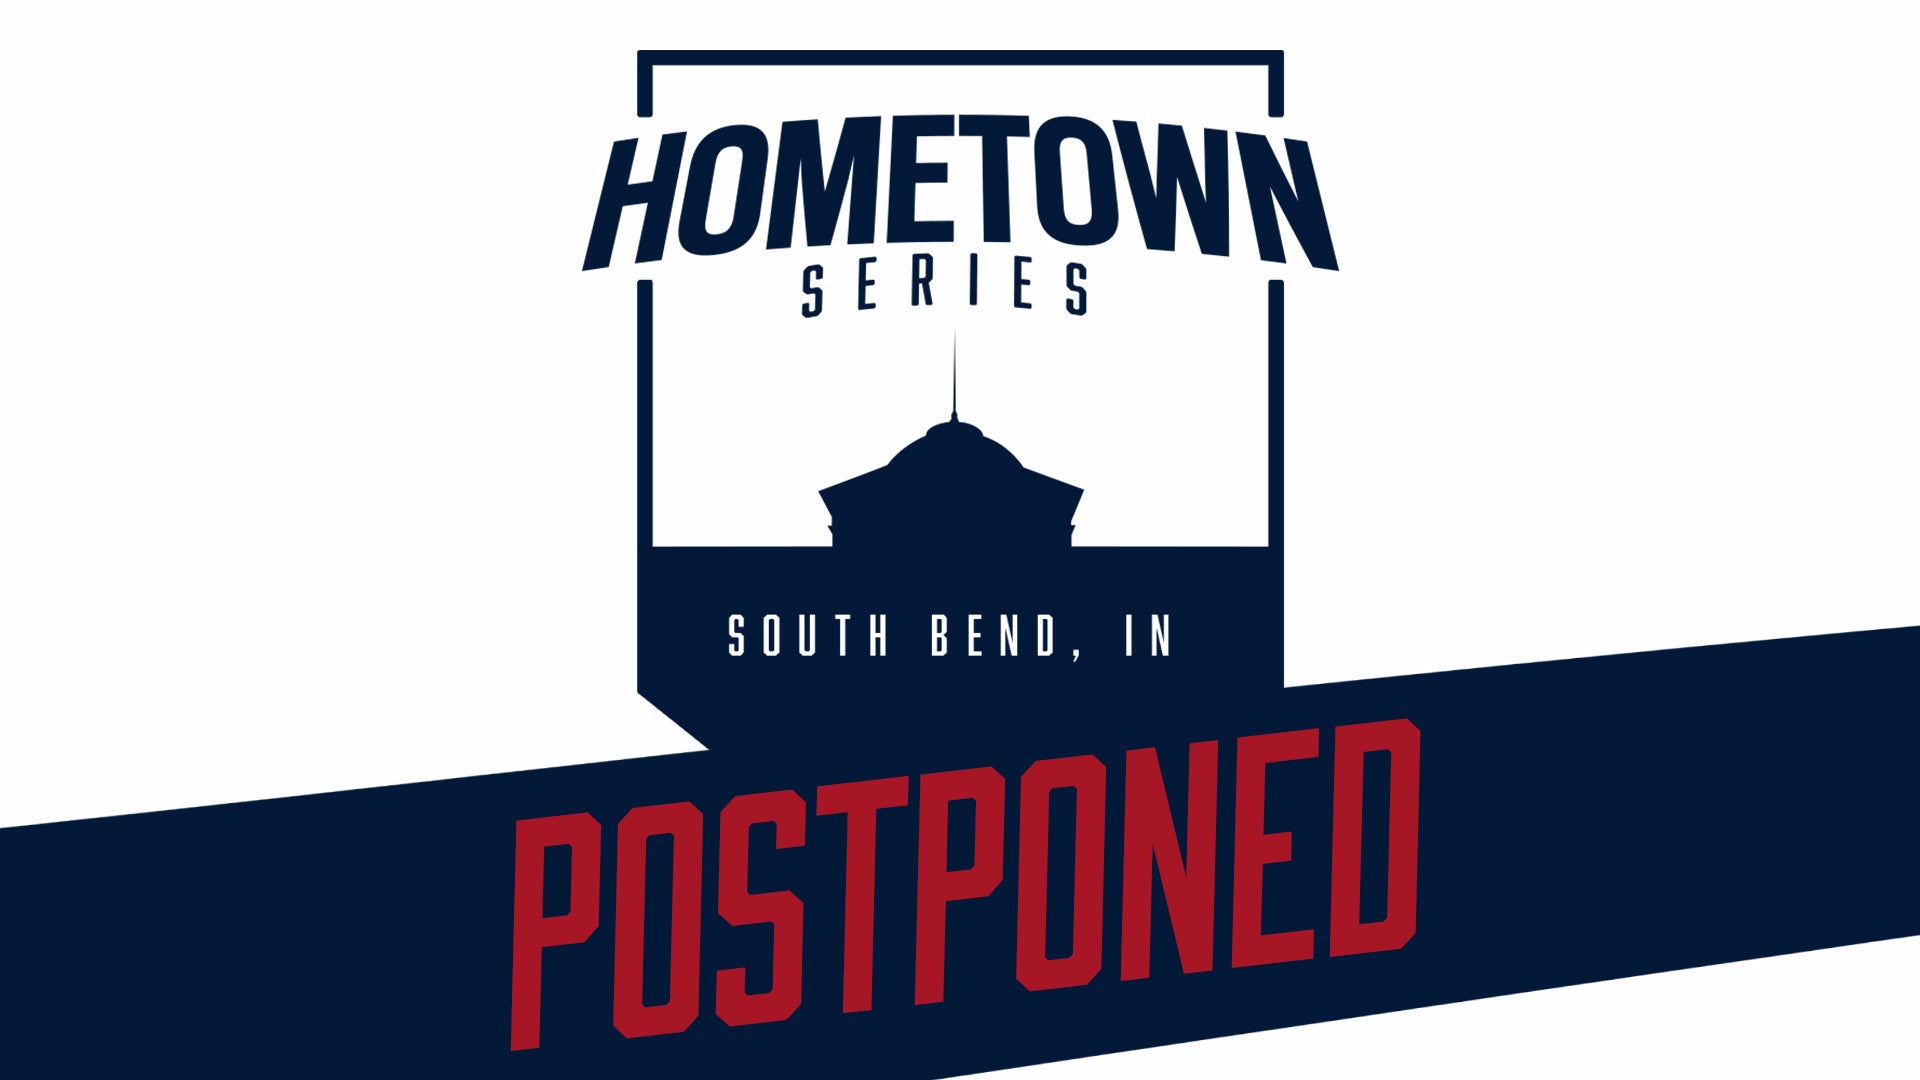 NECC Hometown Series Scholastic LAN in South Bend Postponed